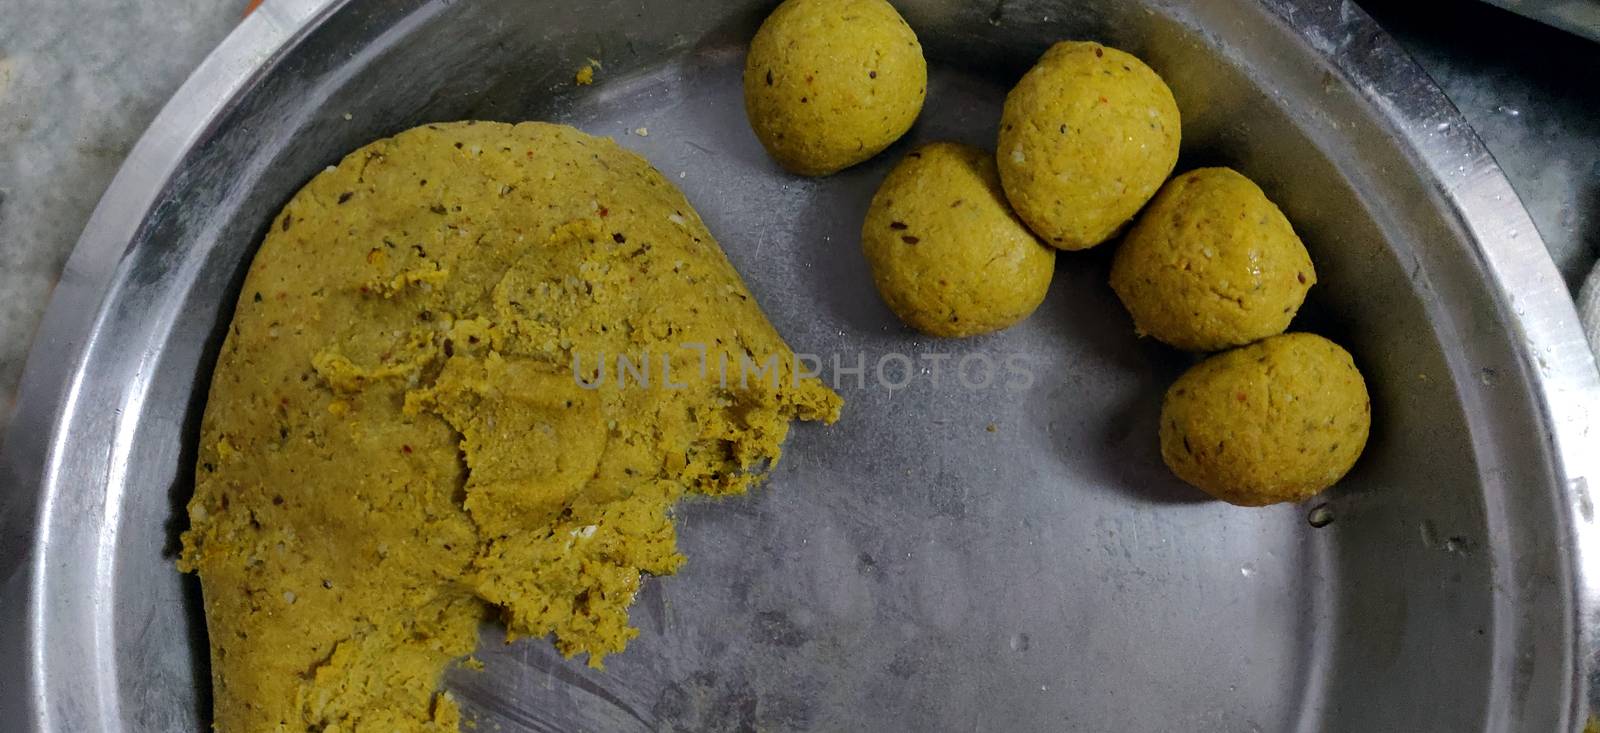 In progress dough of indian fried dish called puri by mshivangi92